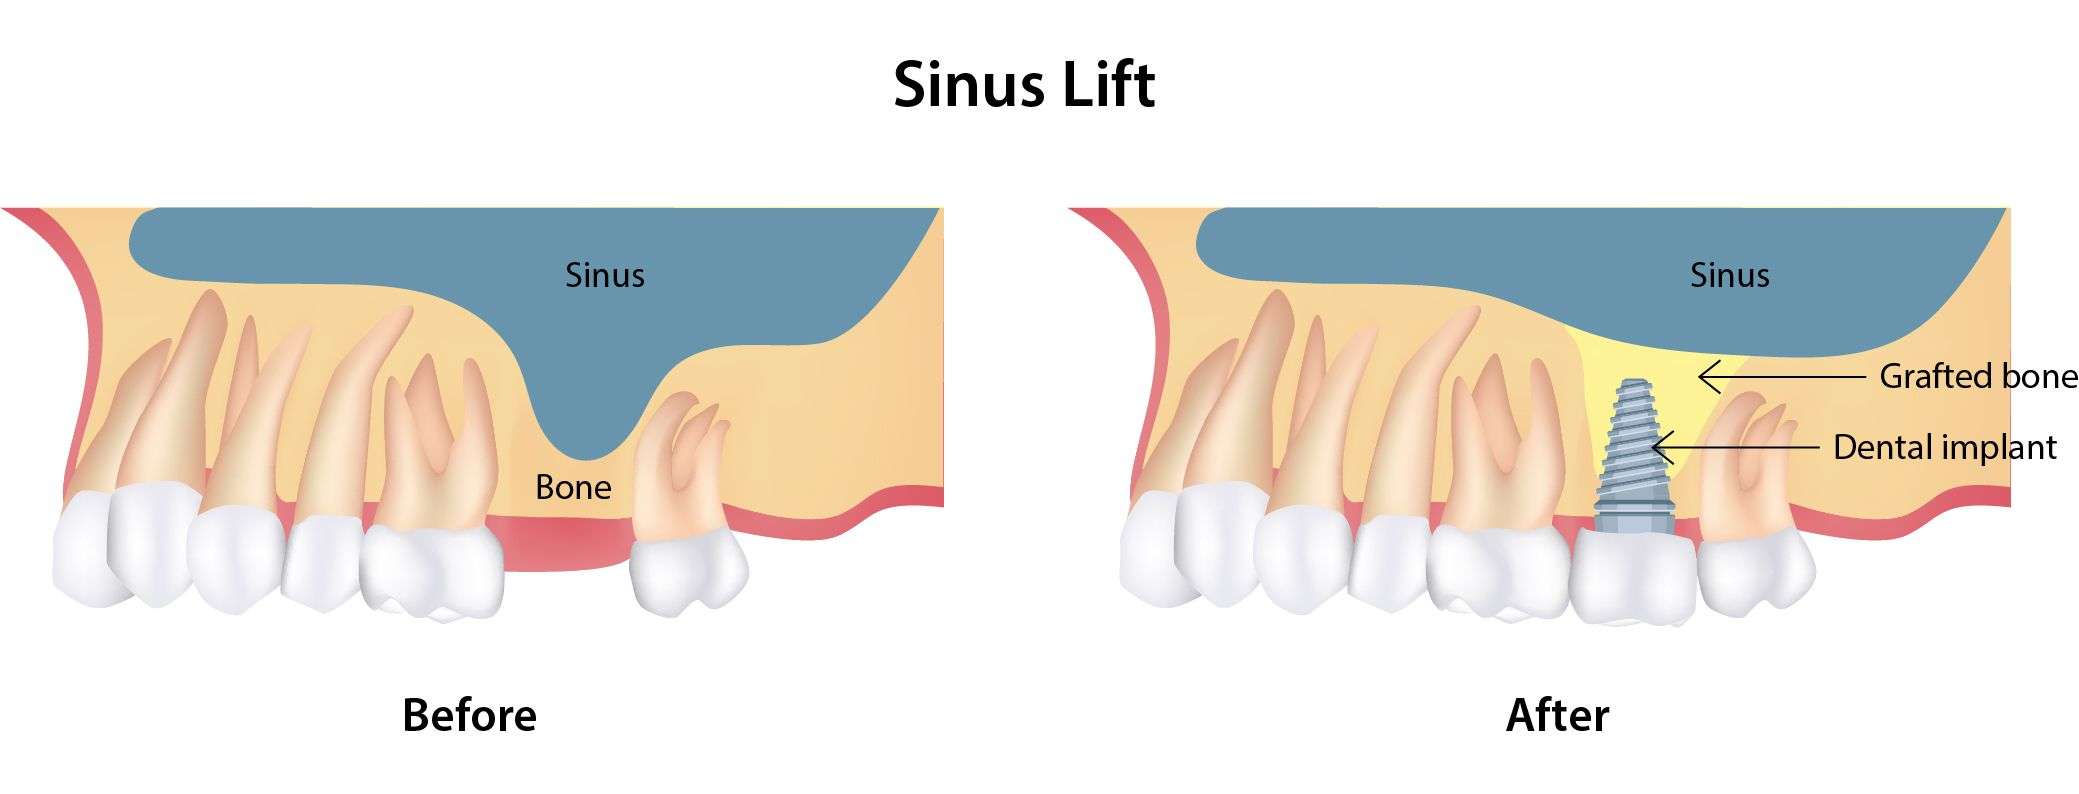 Sinus Lift Surgery